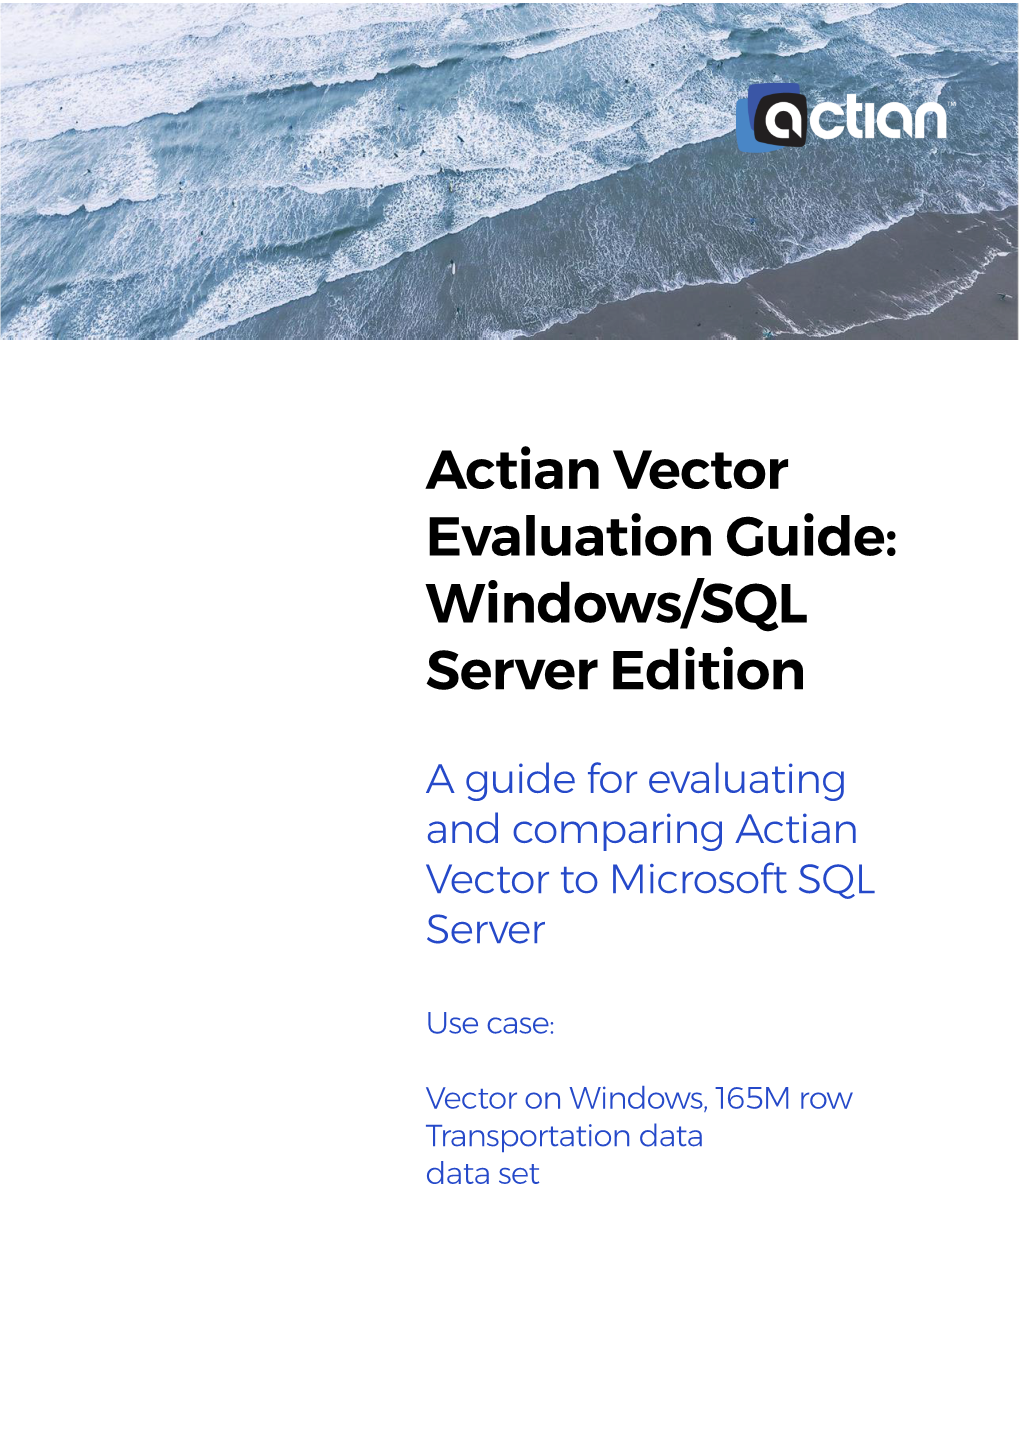 Actian Vector Evaluation Guide: Windows/SQL Server Edition